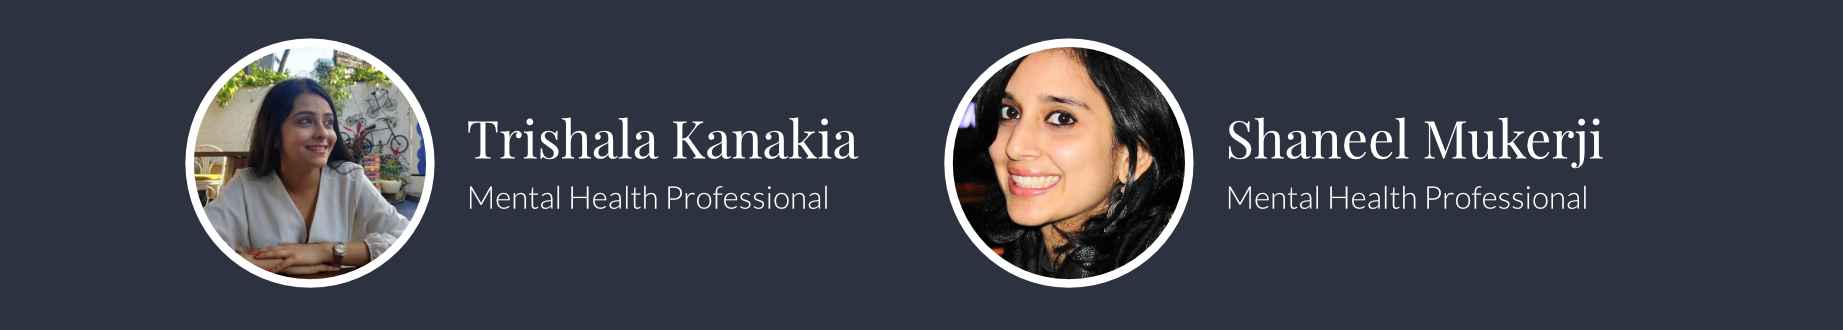 Facilitated By Trishala Kanakia, Saneel Mukerji who are both Mental Health Professionals